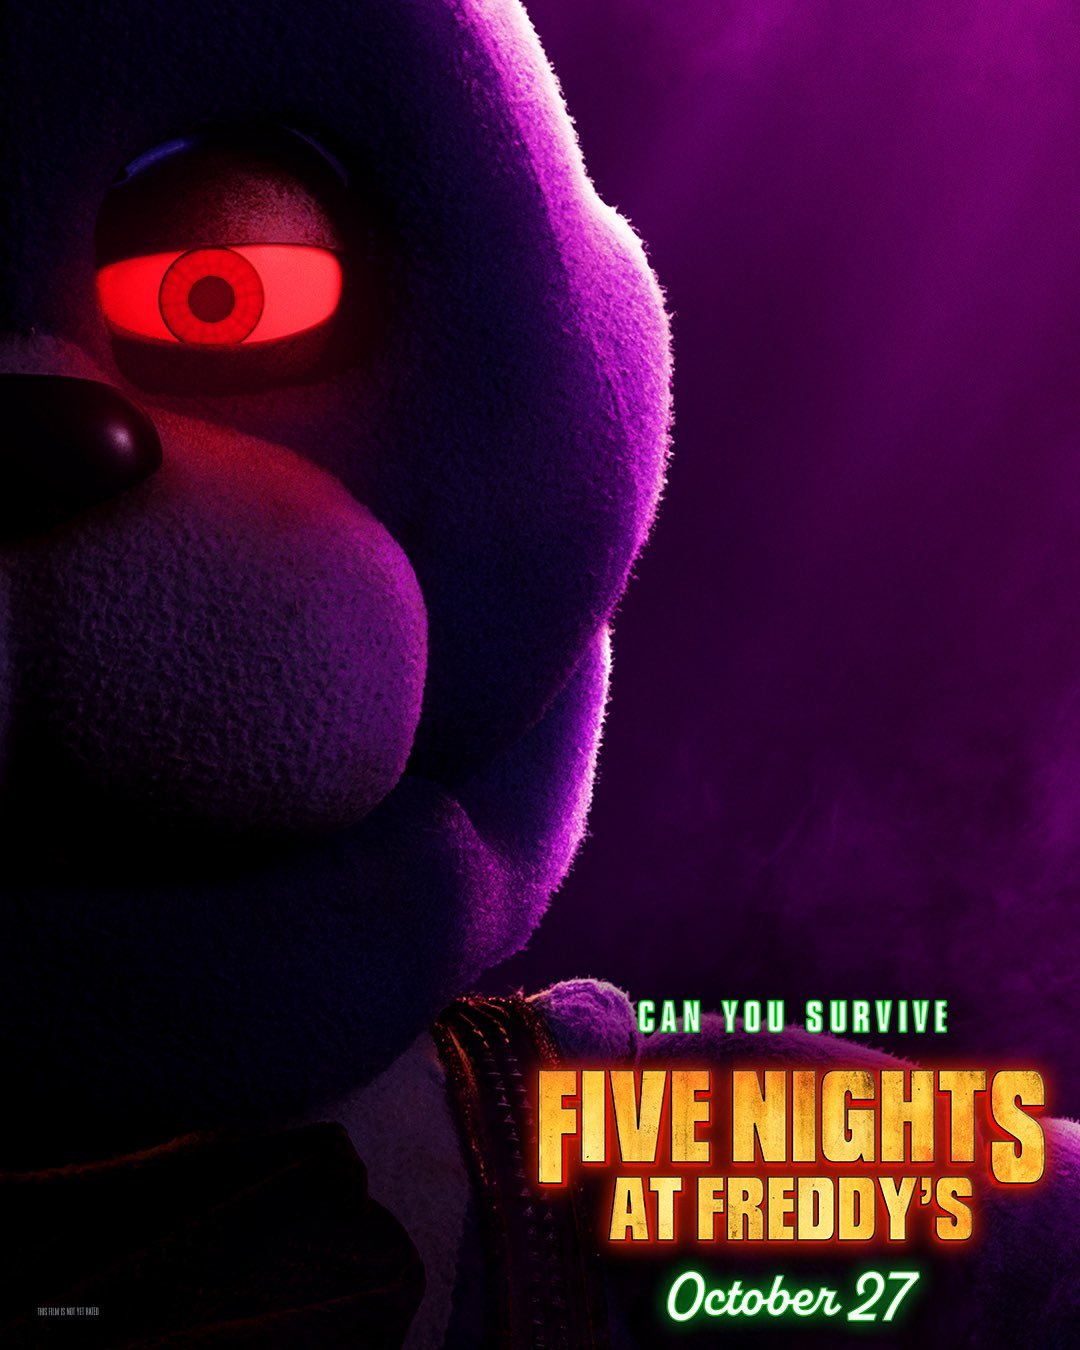 Tudo o que sabemos sobre o filme de Five Nights at Freddy's - NerdBunker